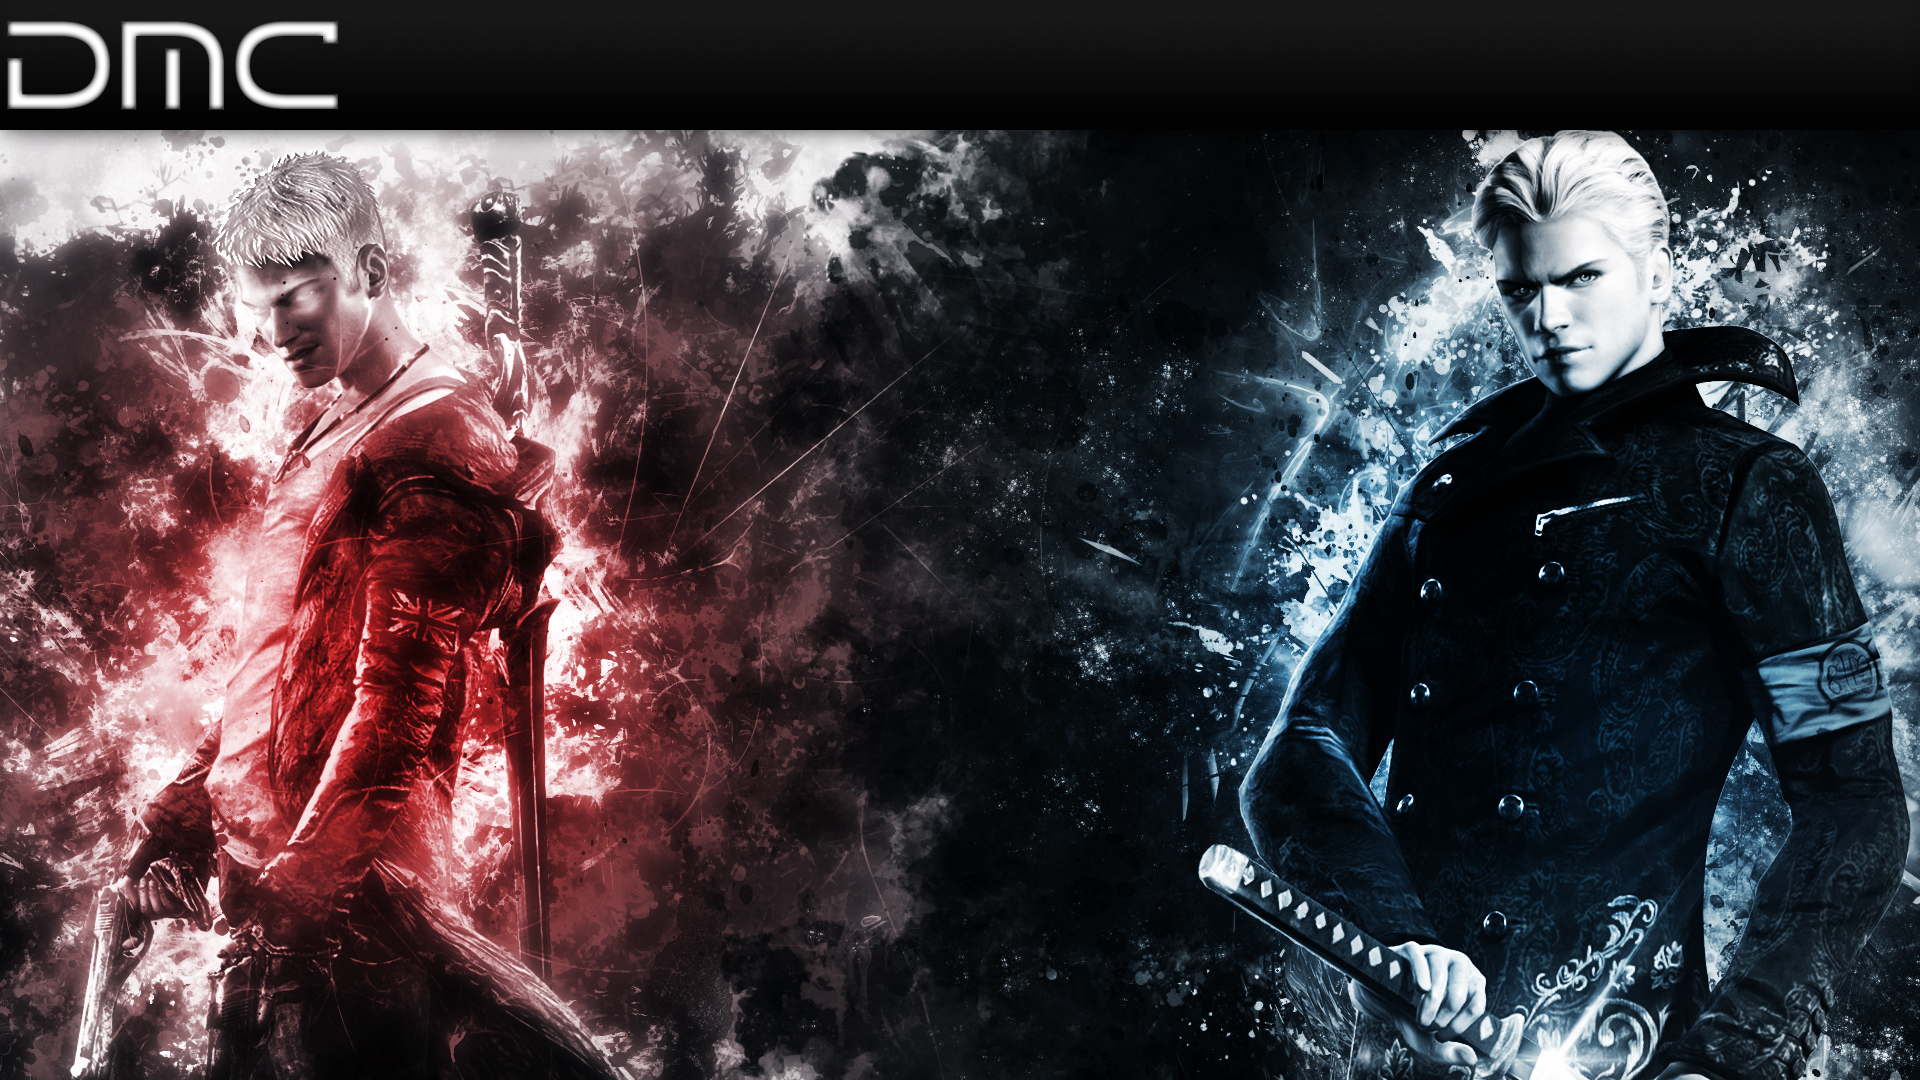 Devil May Cry 4: Special Edition - Vergil by Britt601 on DeviantArt